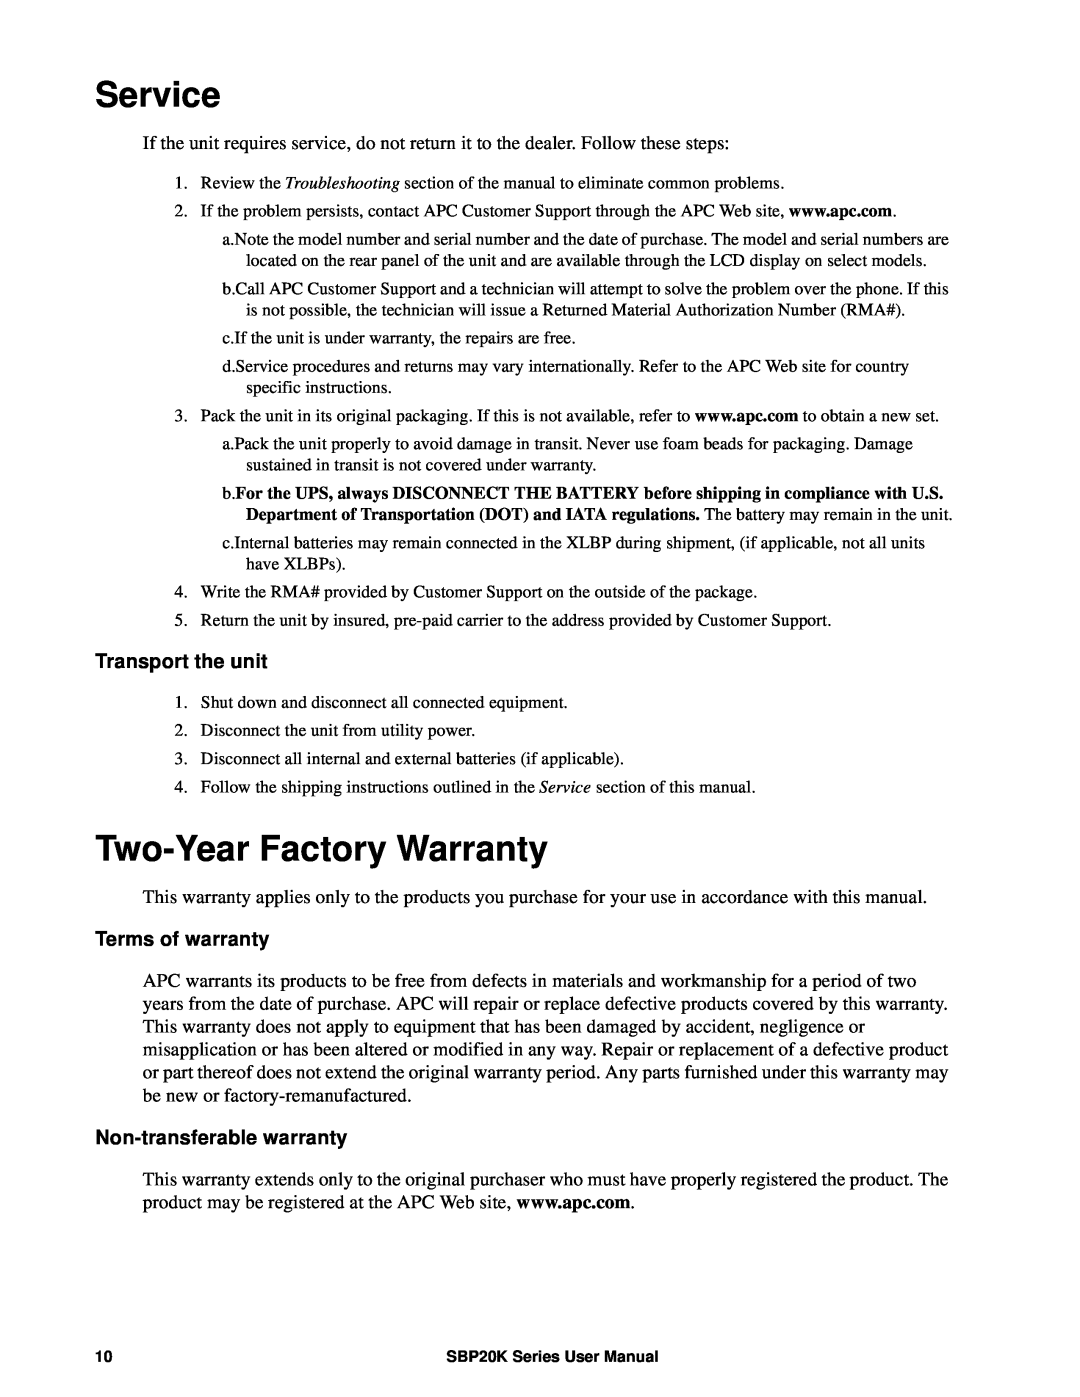 APC SBP20KRMI4U manual Service, Two-Year Factory Warranty, Transport the unit, Terms of warranty, Non-transferable warranty 